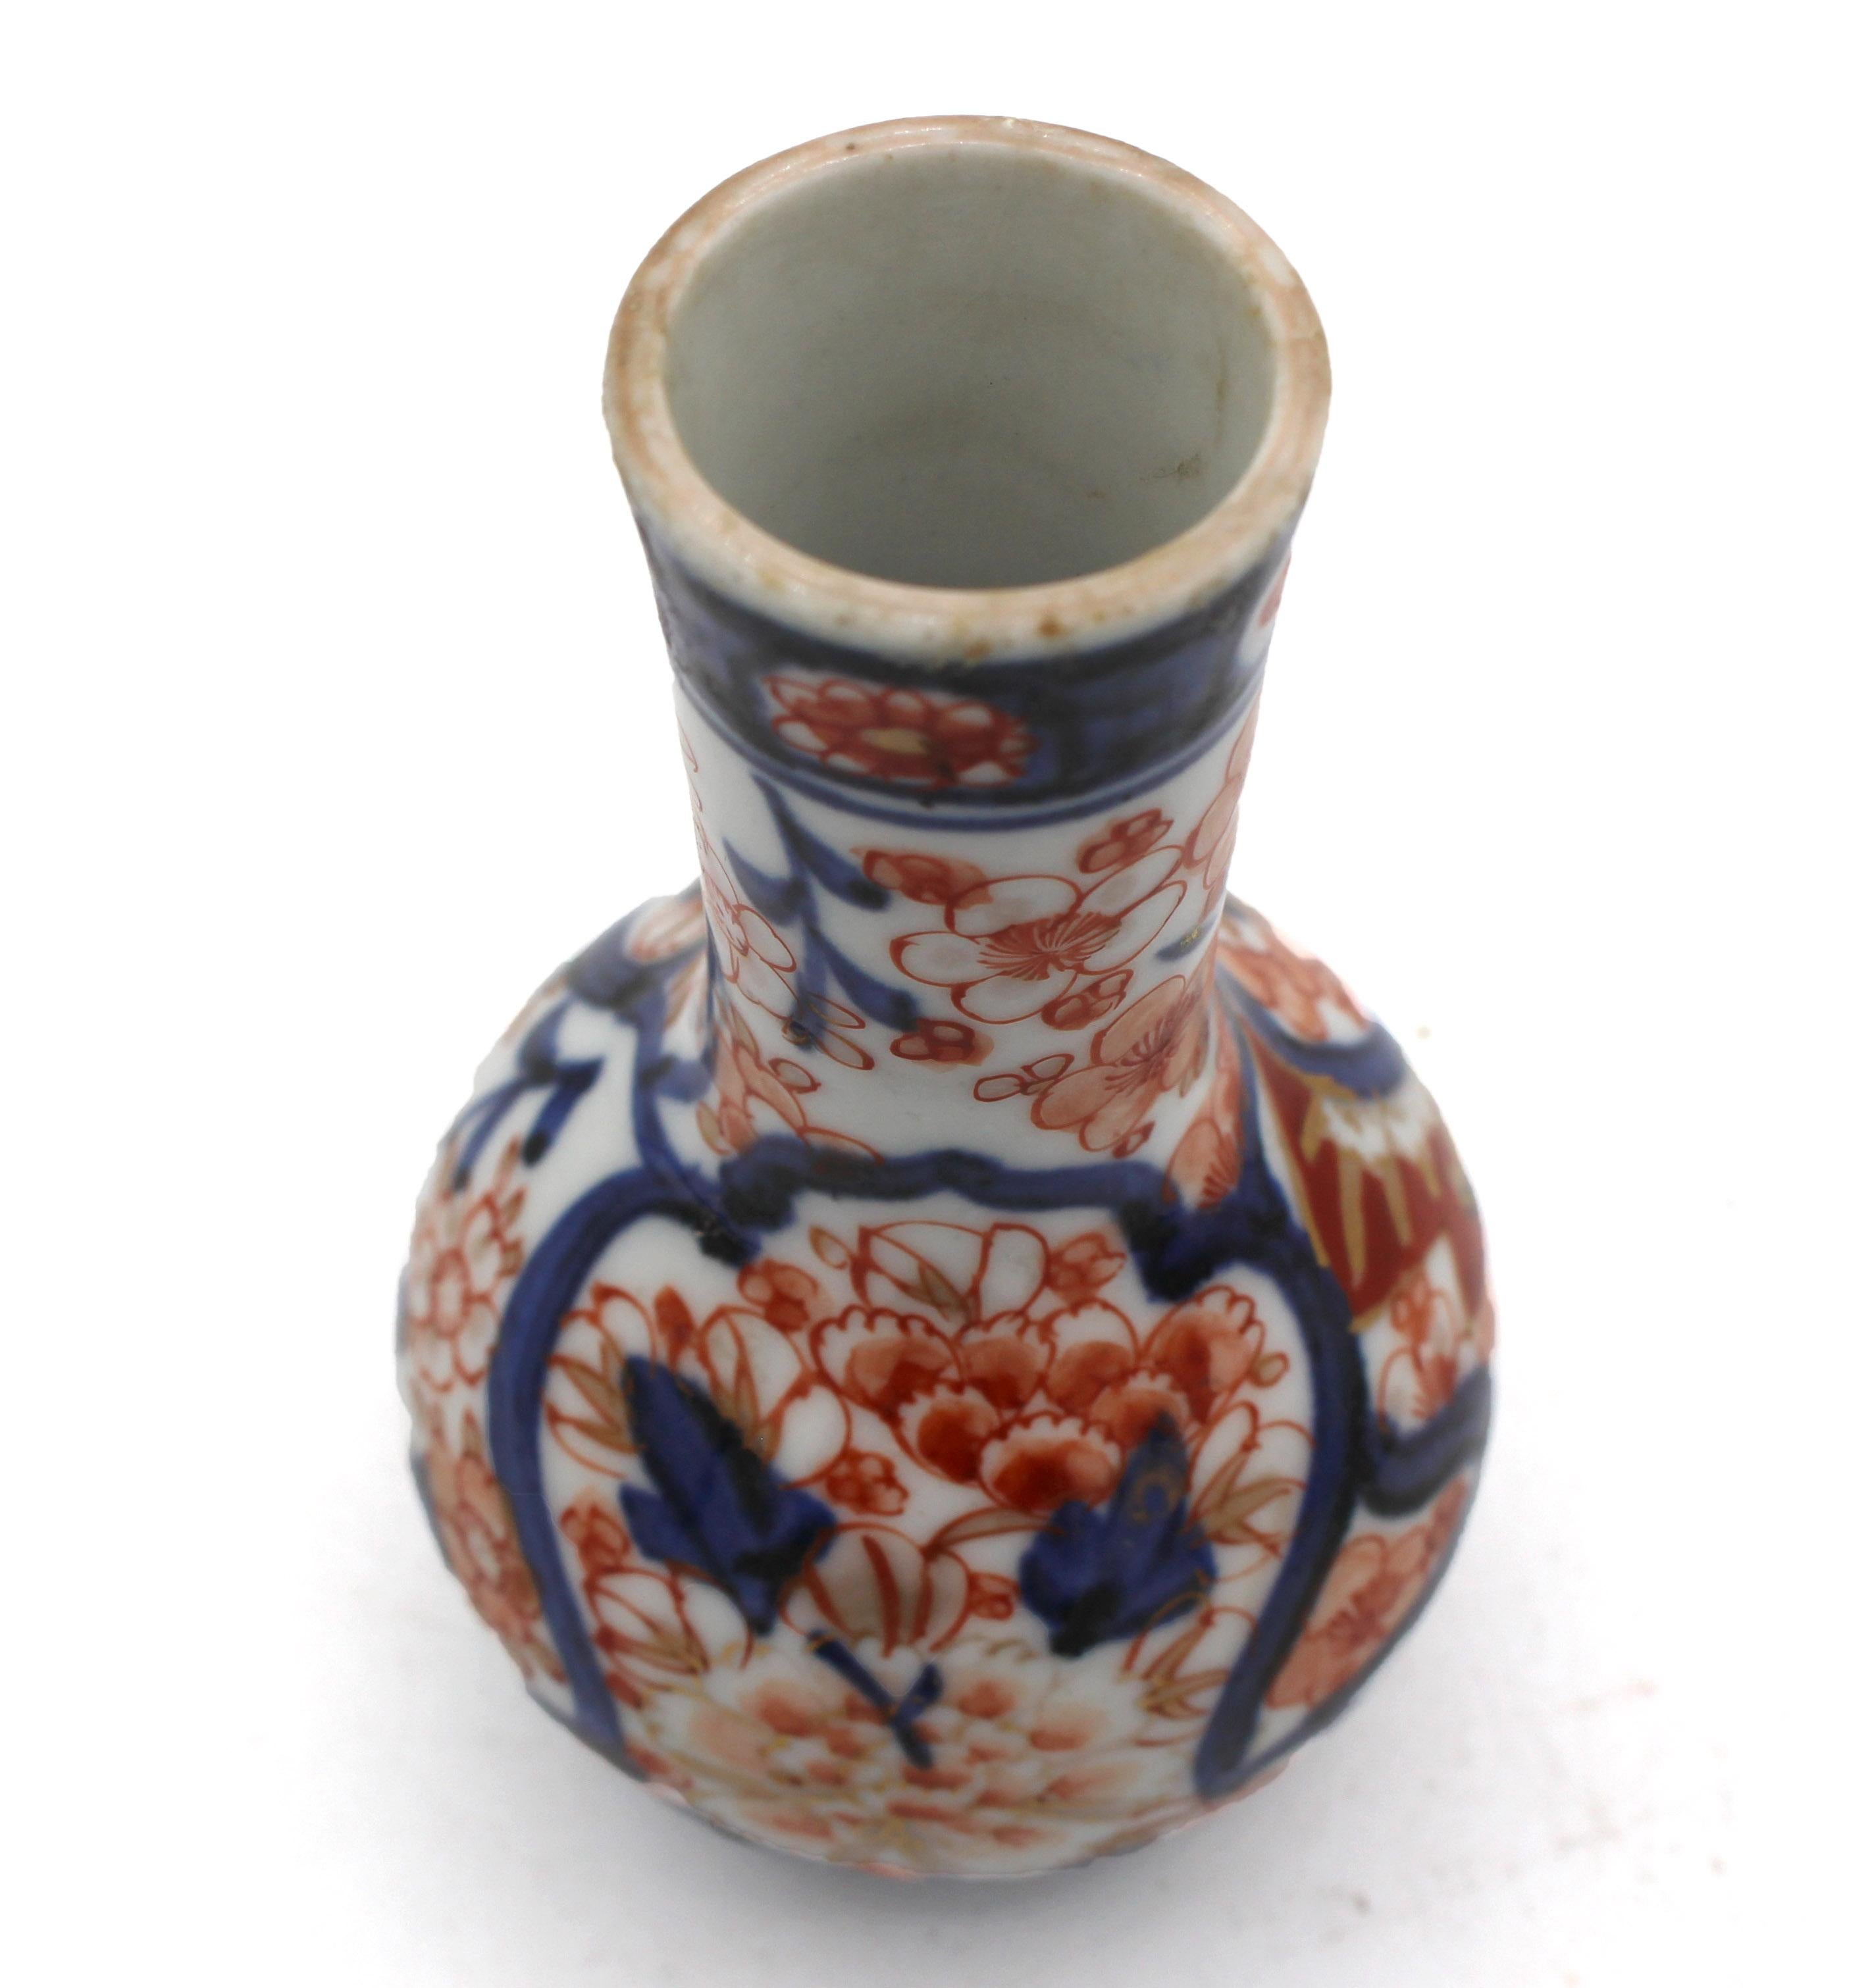 Ceramic Late Meiji era, Circa 1870s Miniature Imari Vase, Japanese